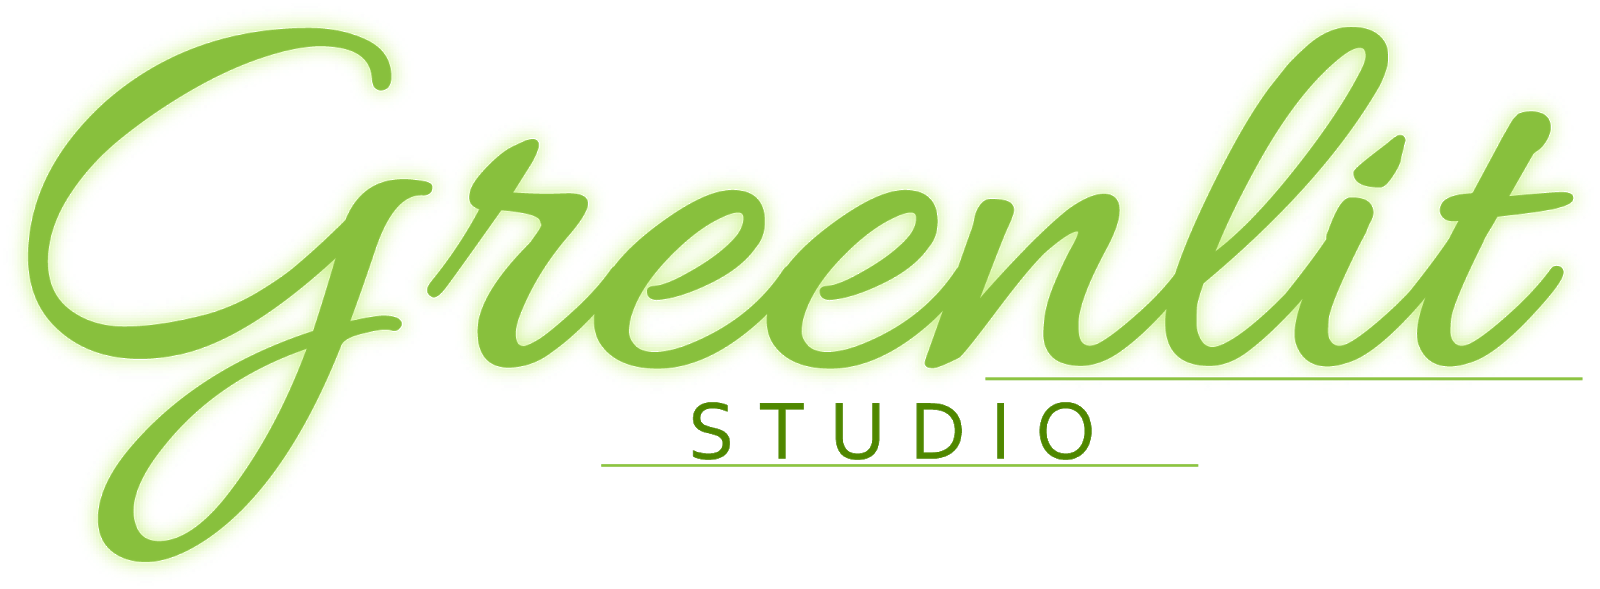 Greenlit Studio